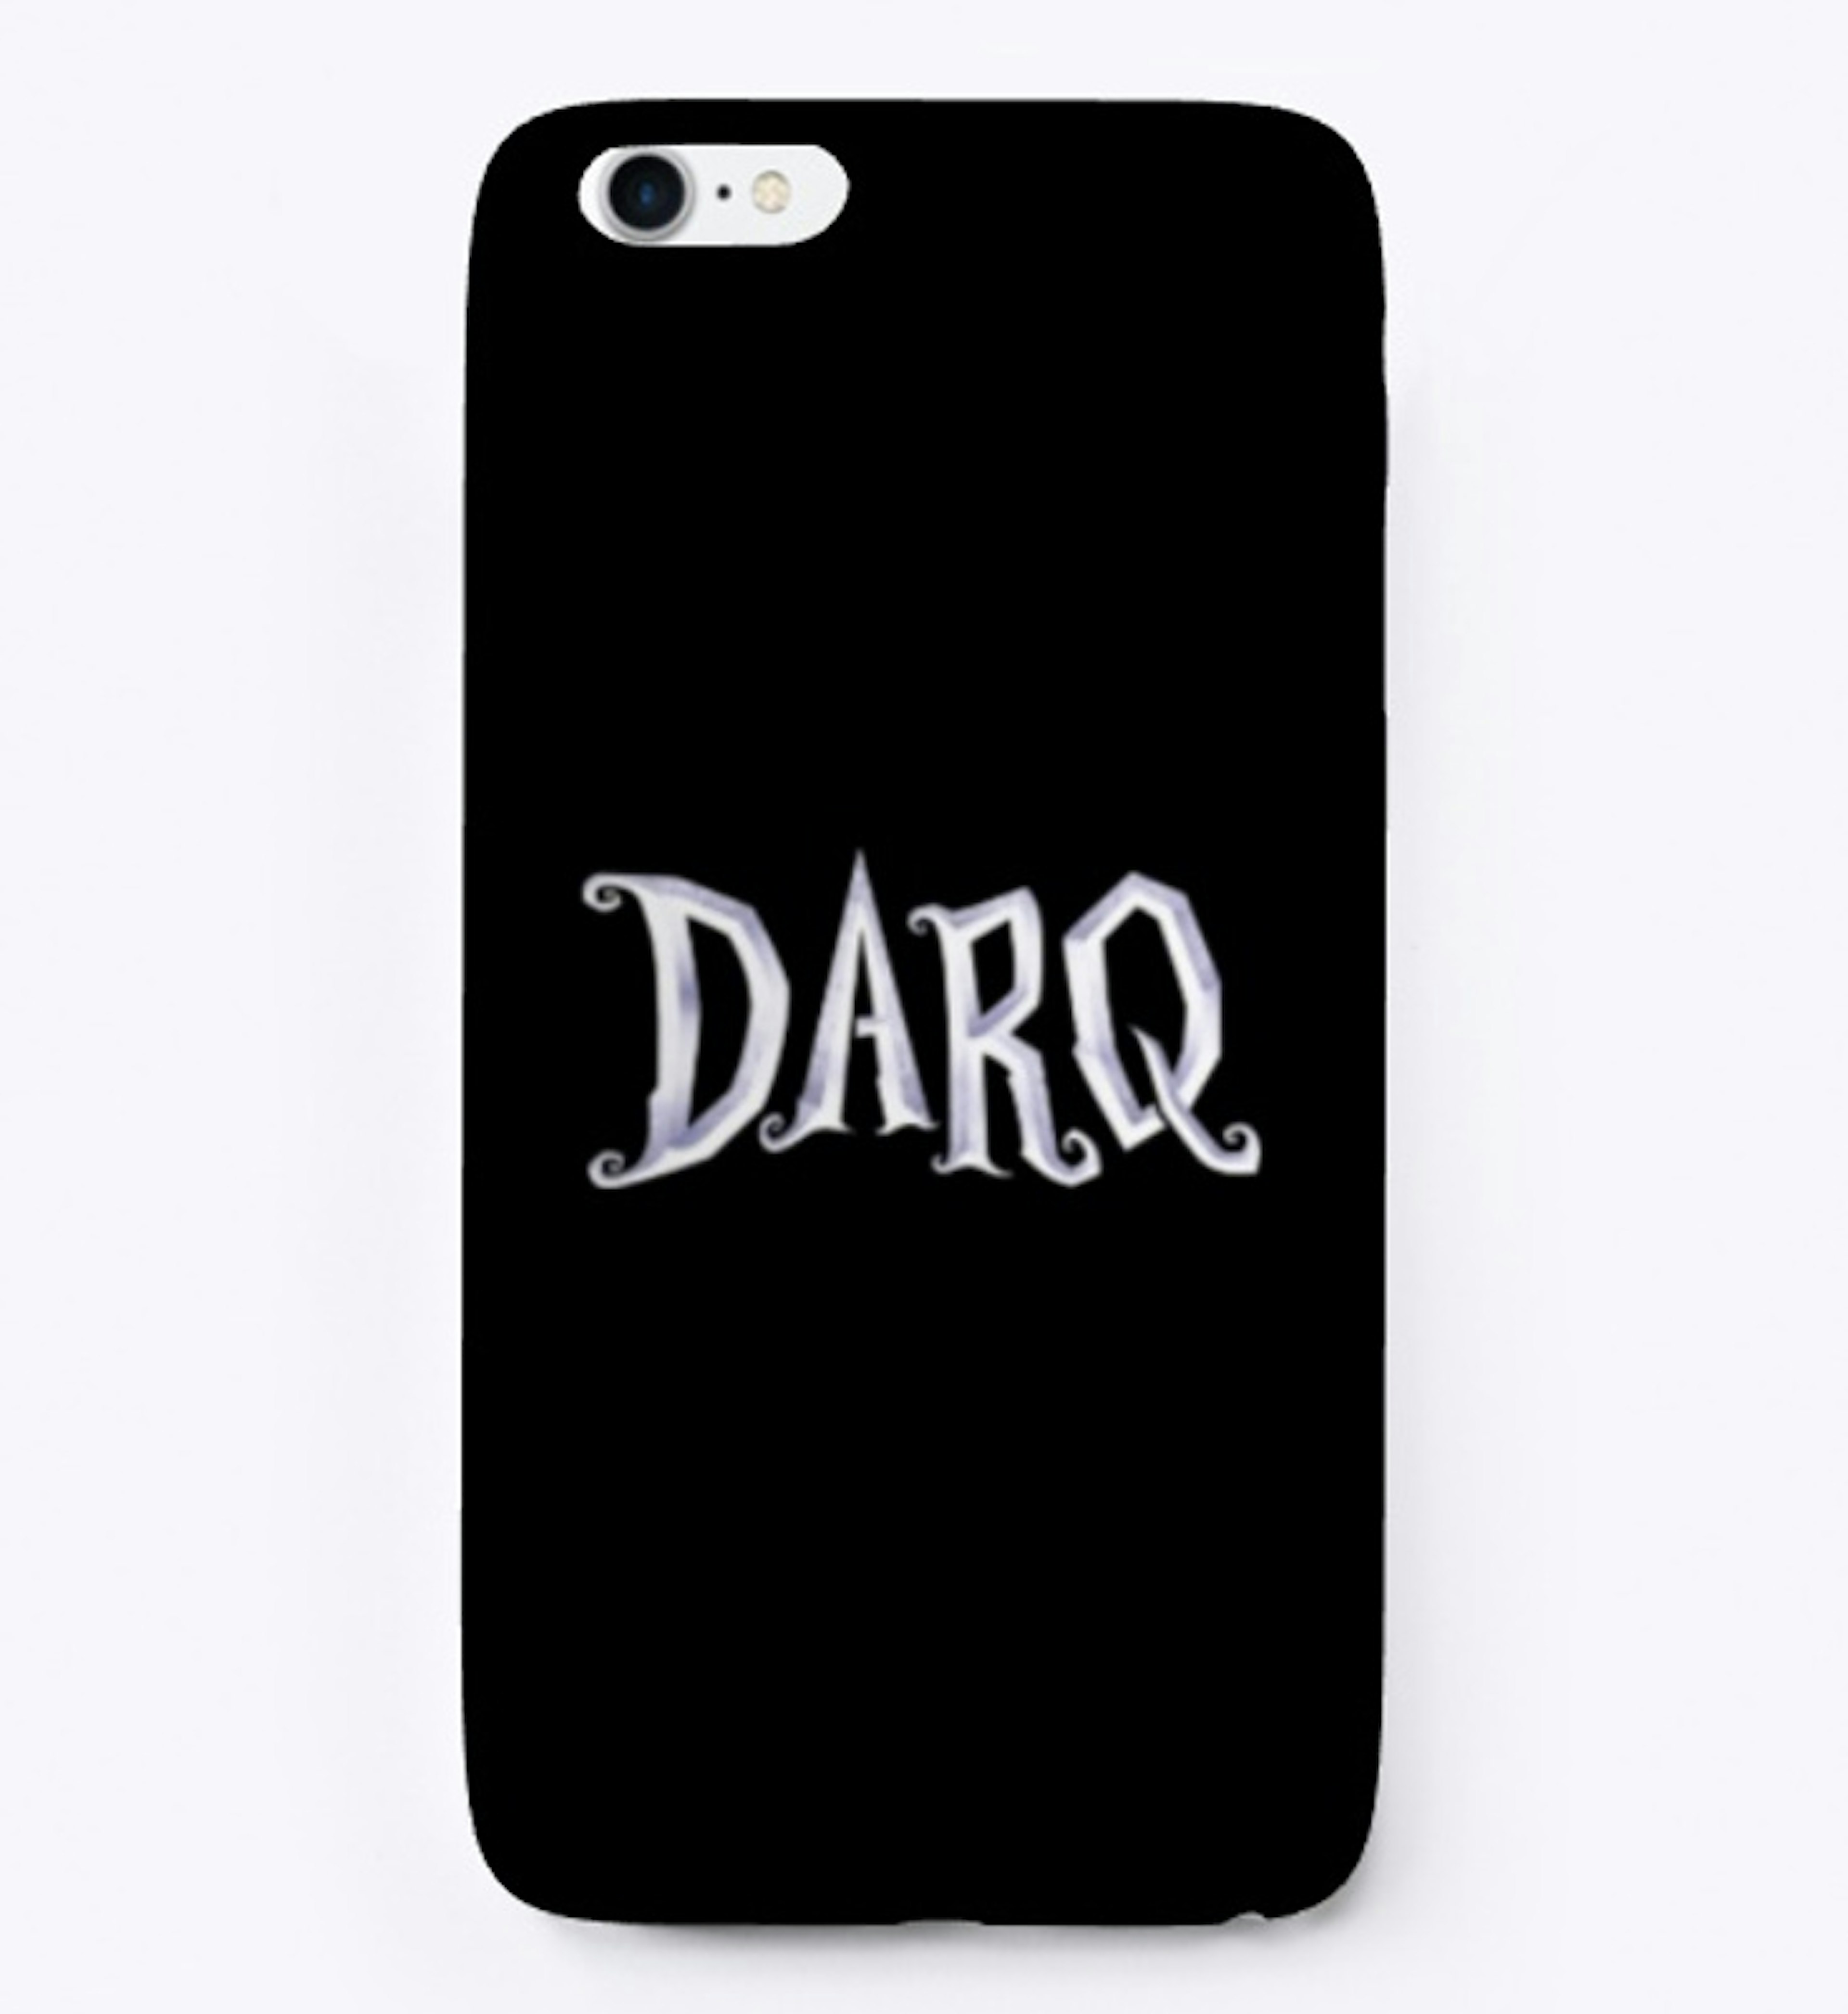 DARQ iPhone Case